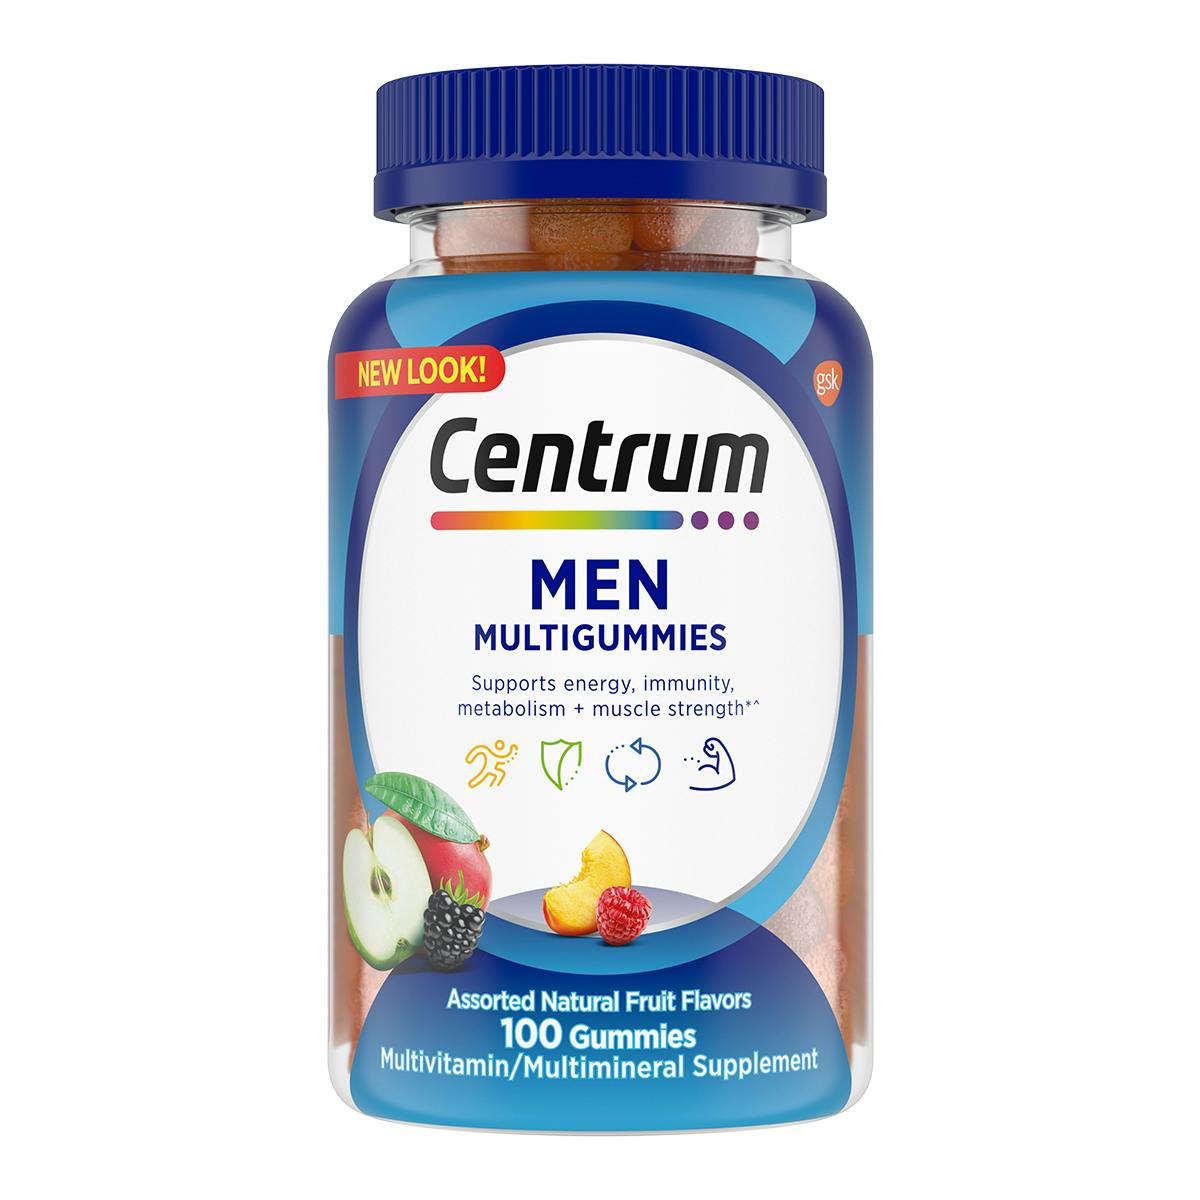 Bottle of centrum MultiGummies for men vitamins2